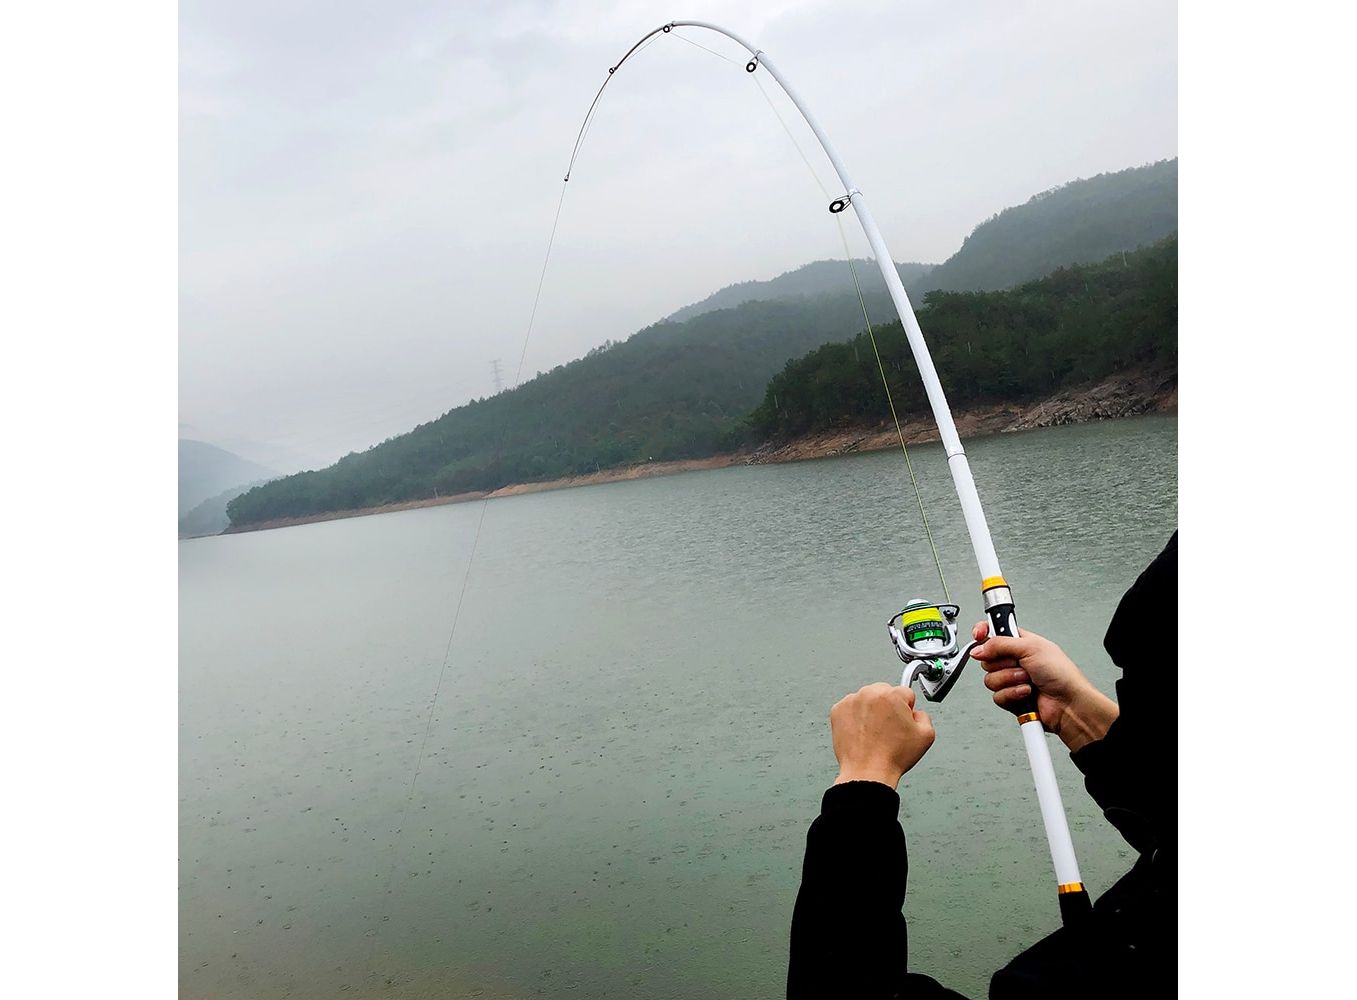 GHOTDA 2.1M 3.6M Carp Fishing Rod feeder Hard FRP Carbon Fiber Telescopic  Fishing Rod fishing pole, Fishing Rods